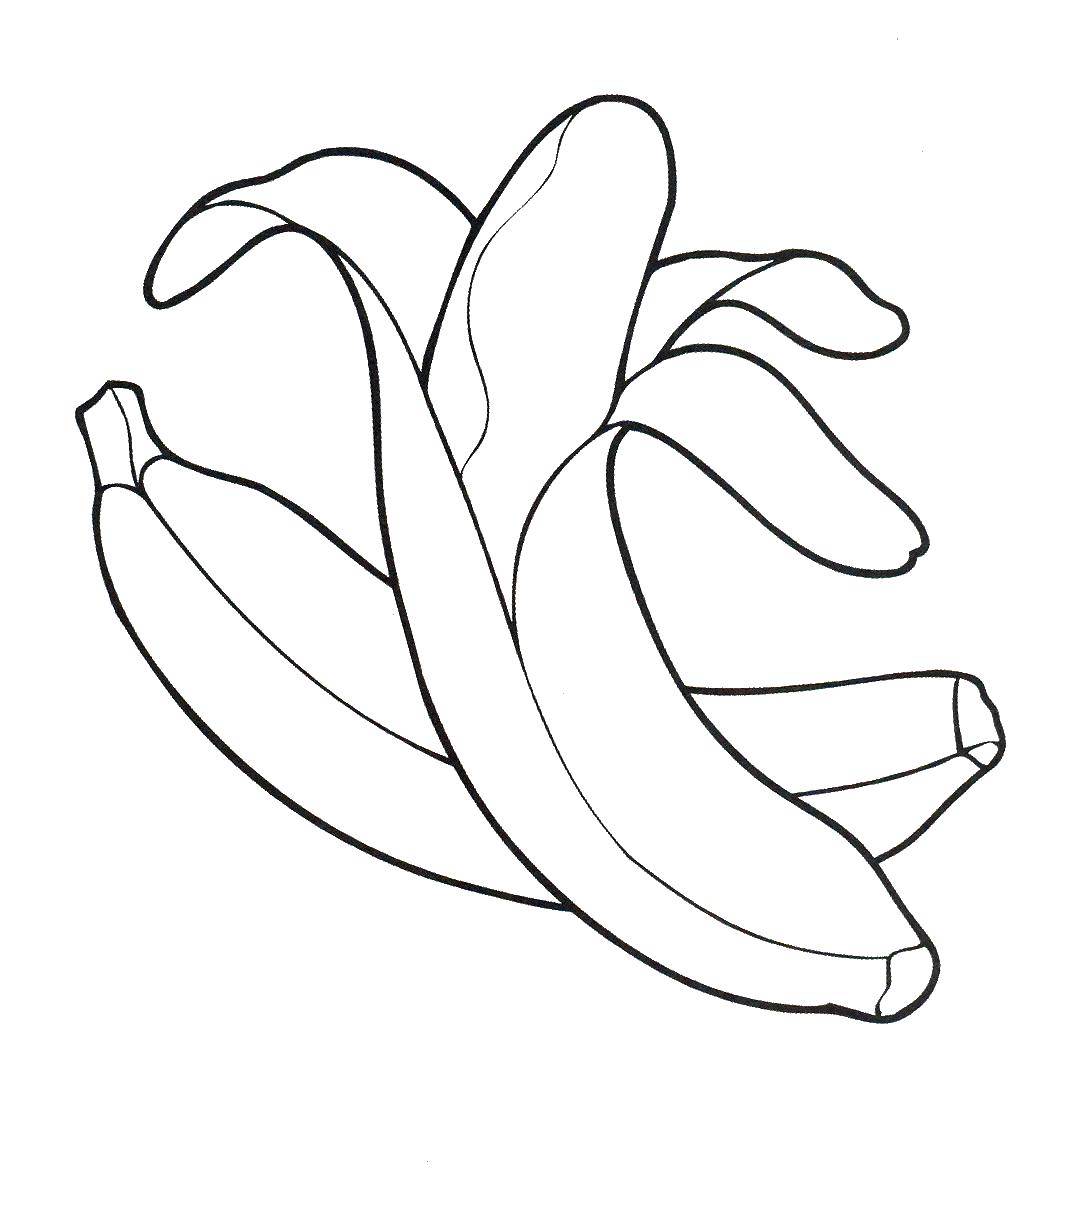 Название: Раскраска Банан. Категория: фрукты. Теги: банан.